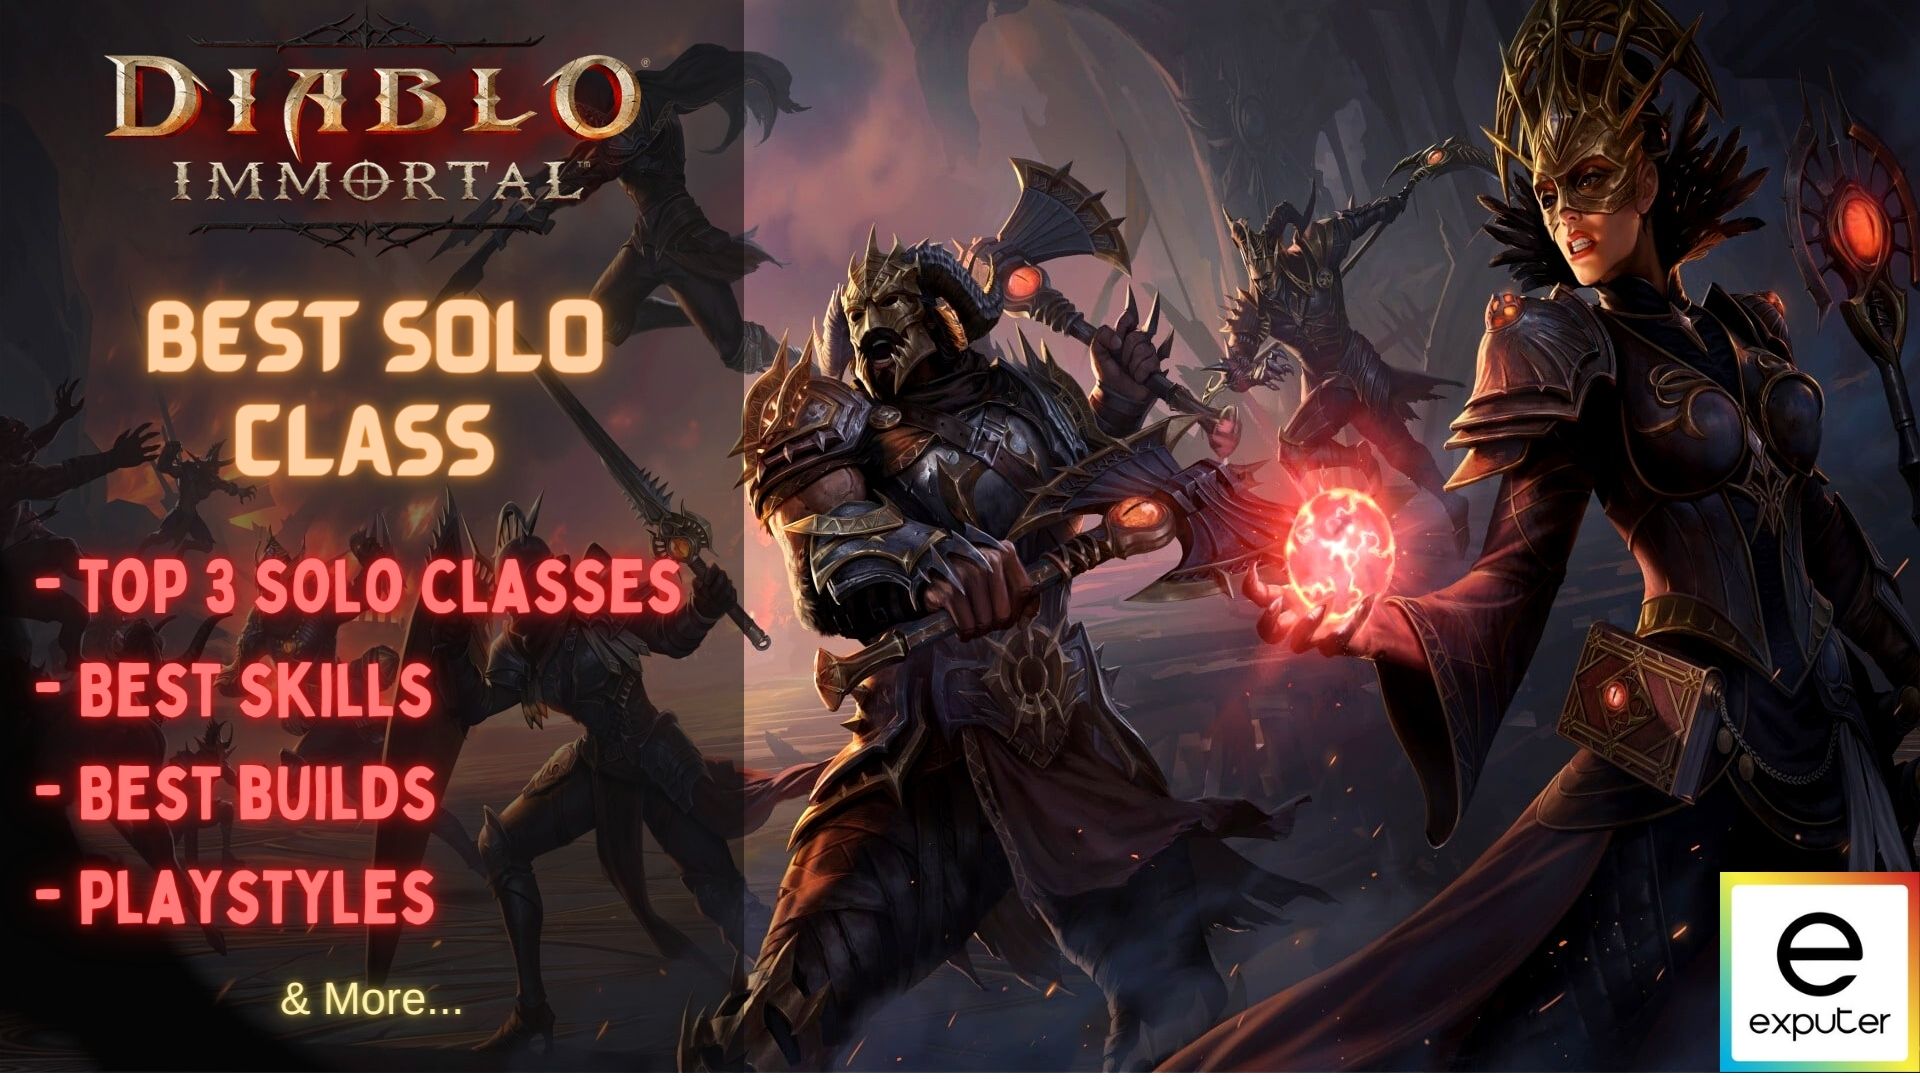 Can I play solo in Diablo Immortal?